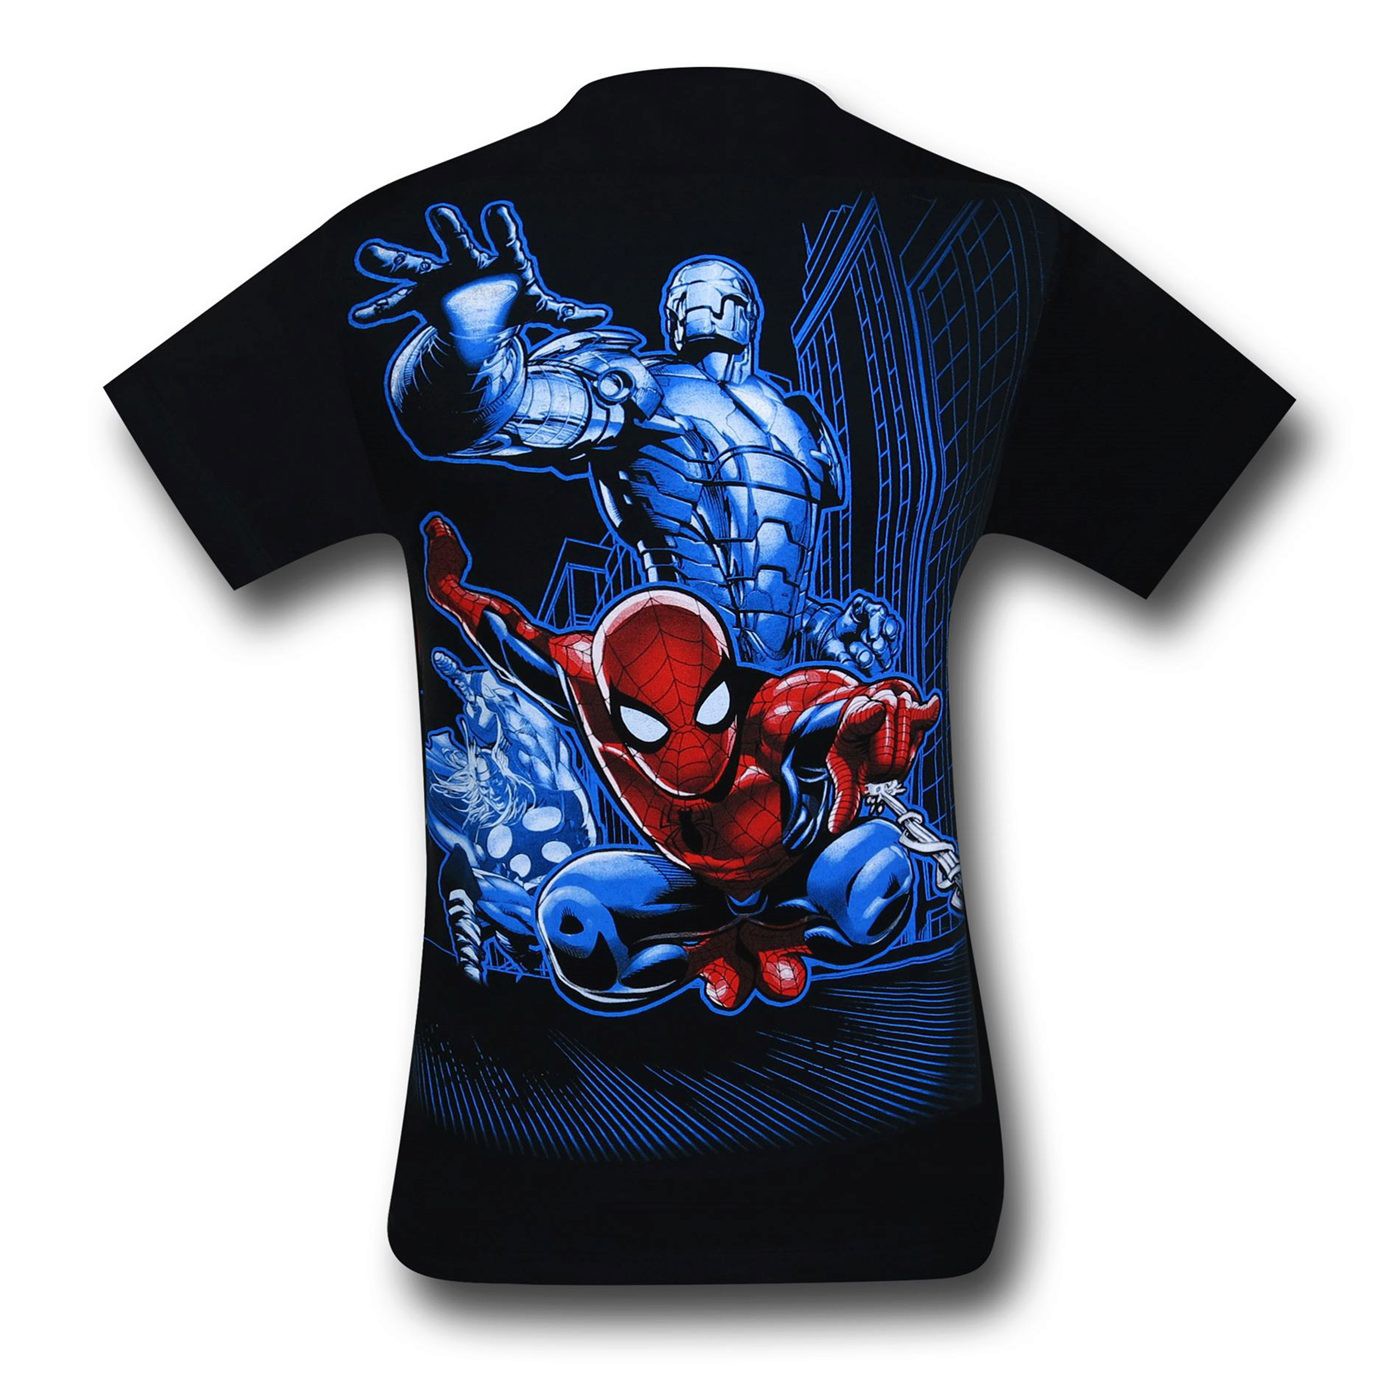 Captain America Take This T-Shirt